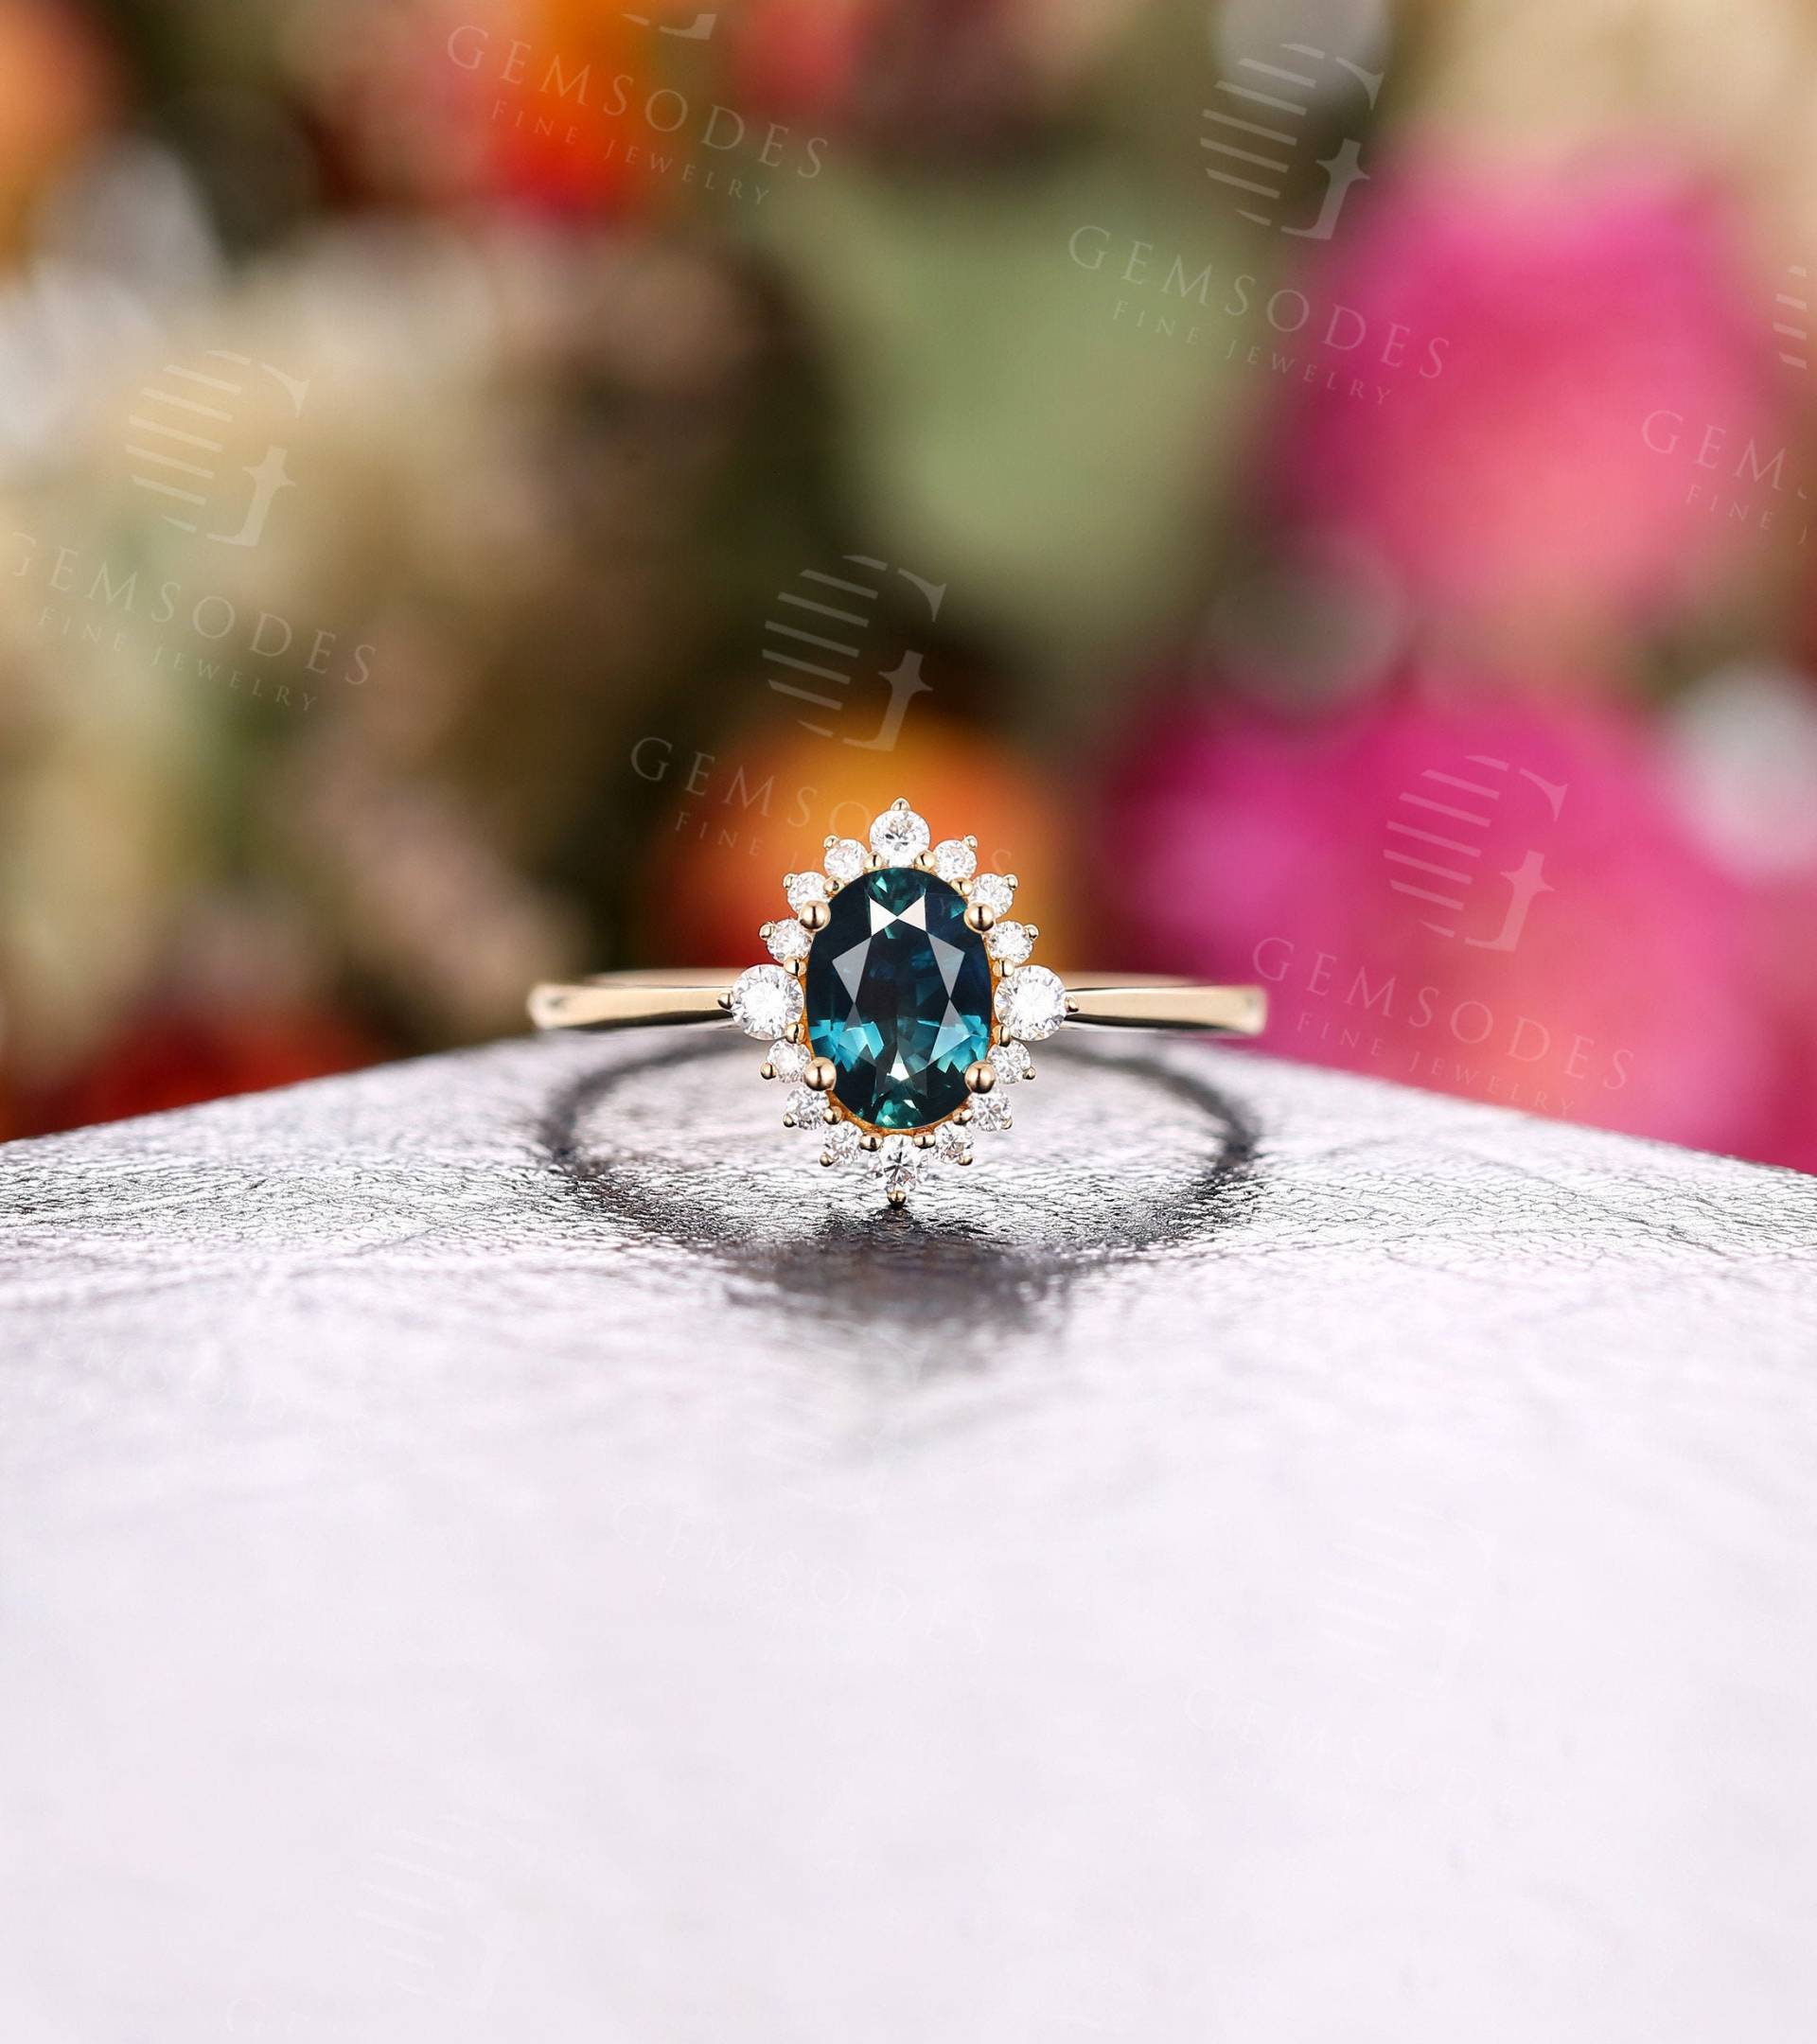 Petrol Saphir Verlobungsring Vintage Rosegold Ring Antik Blau Grün Natur Diamant Ehering Jahrestag Ringe von GemsOdes